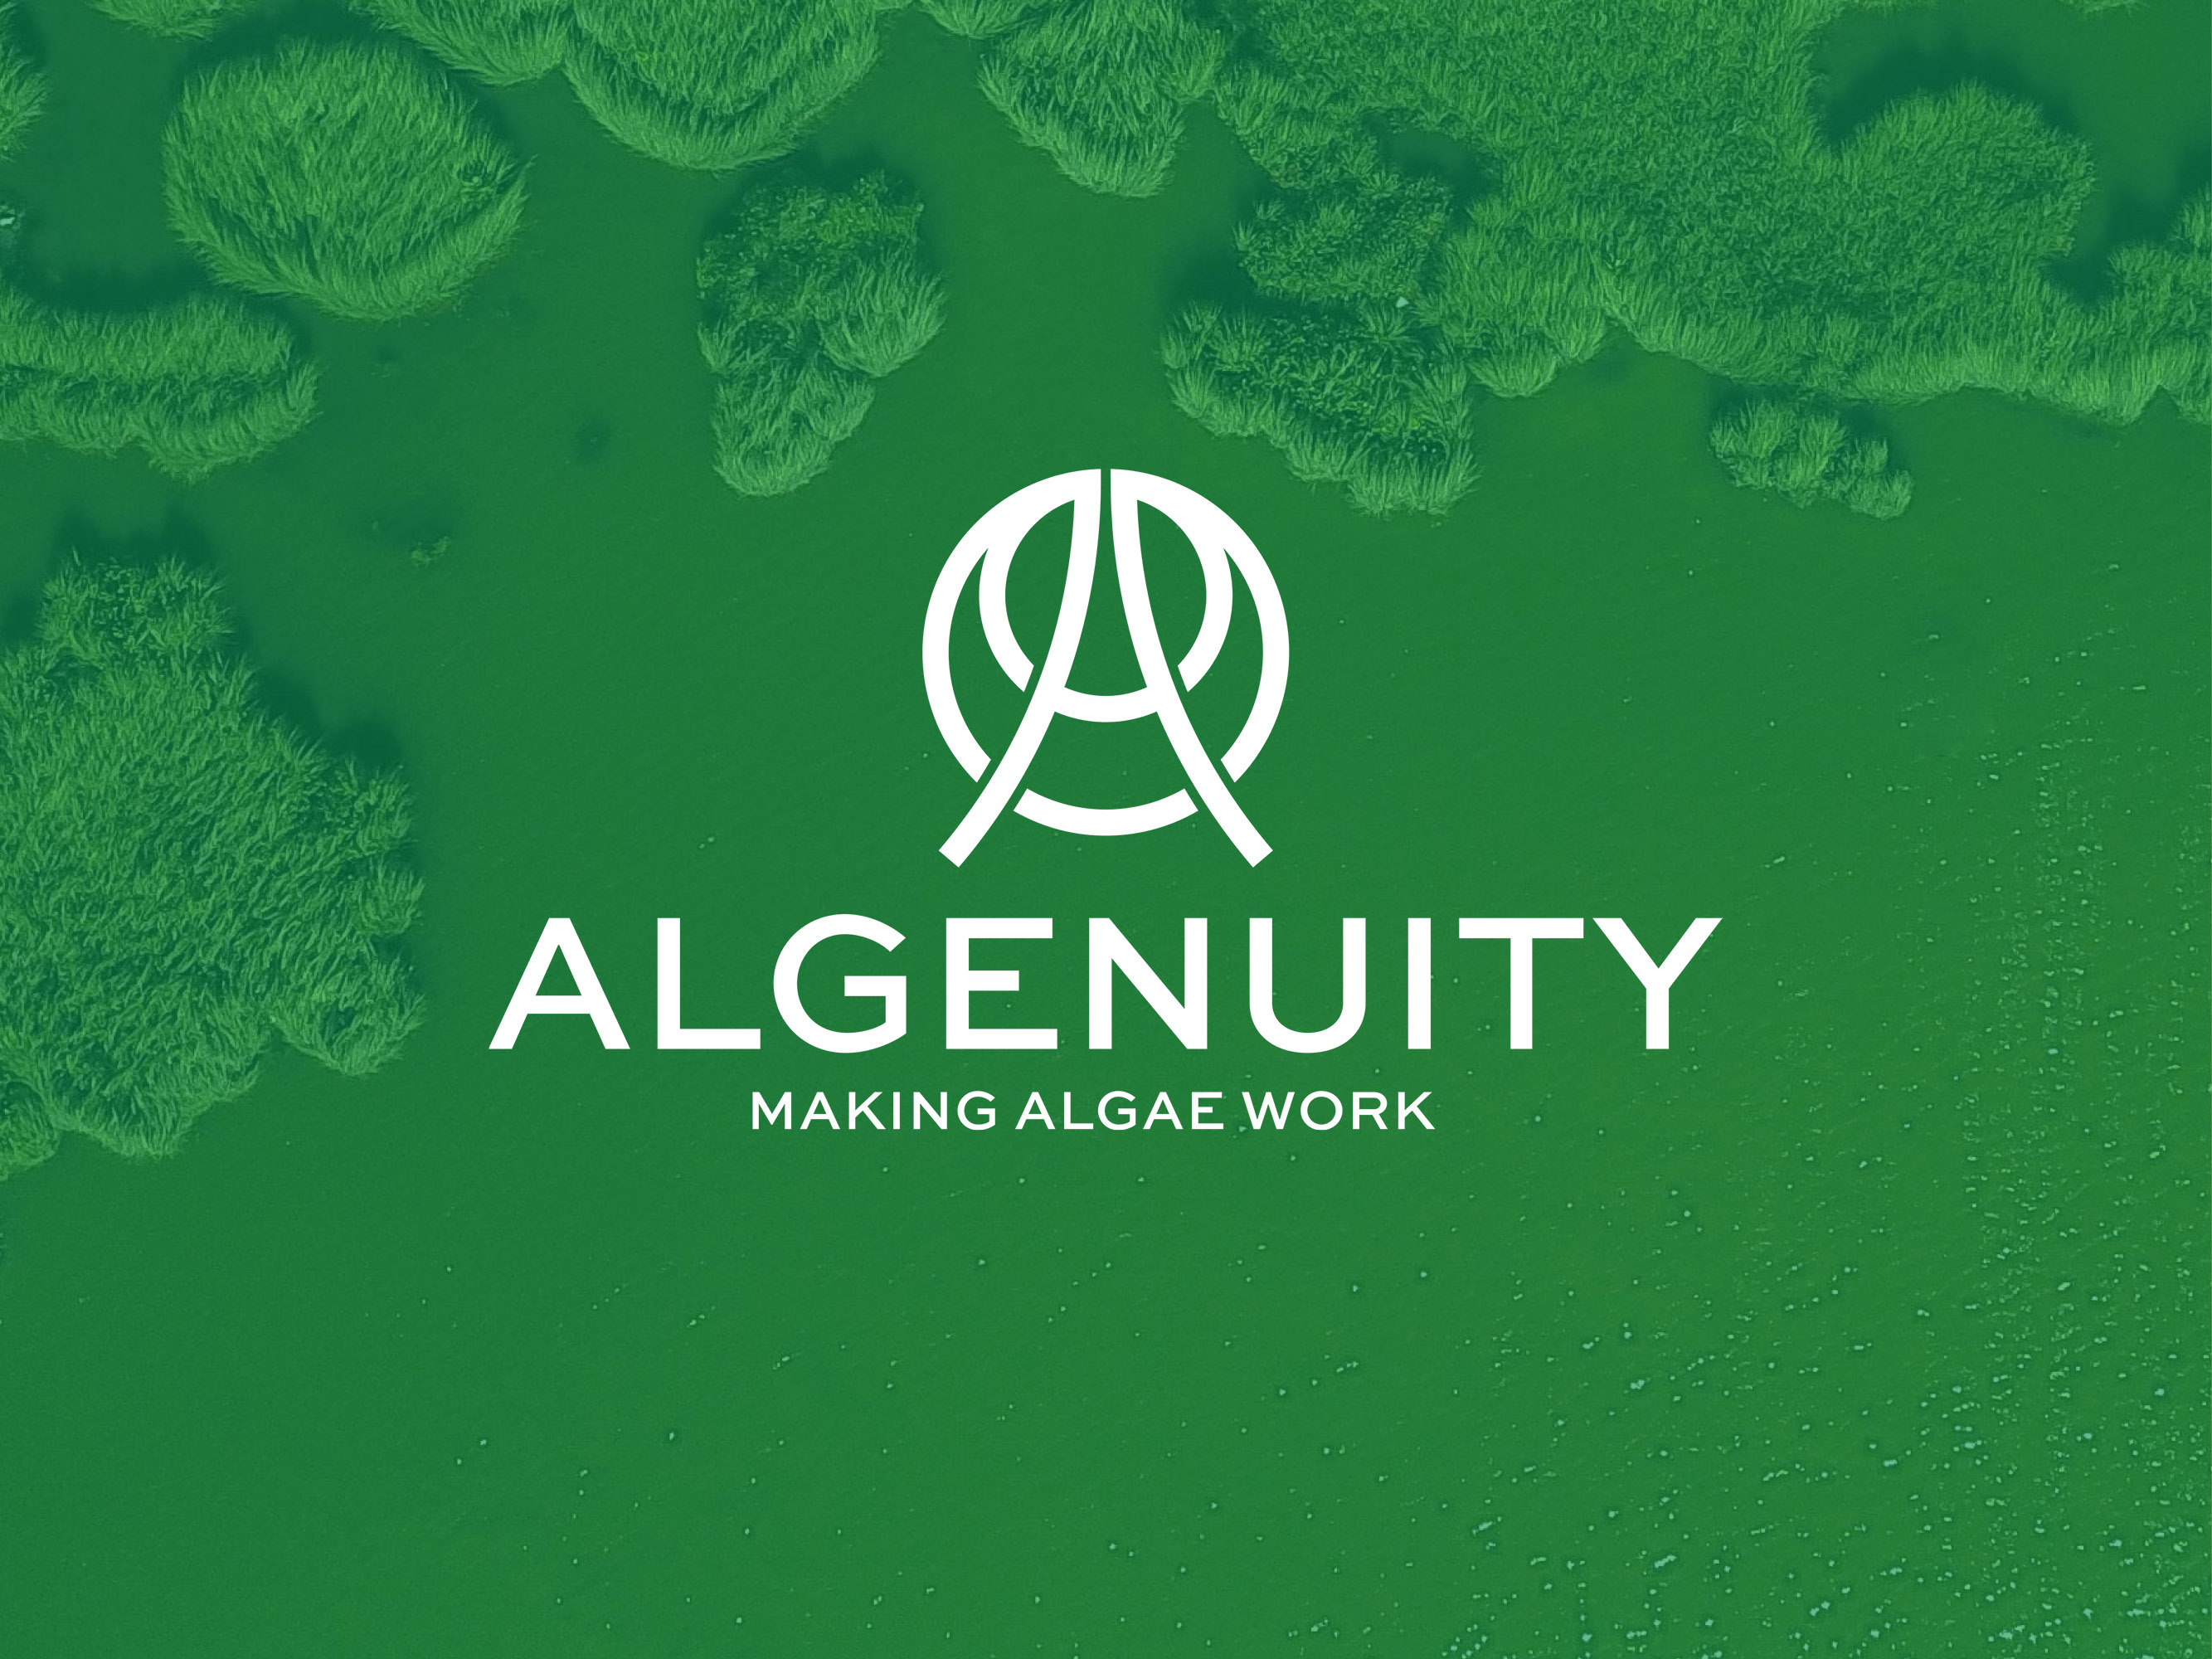 Algenuity biotech logo and branding design